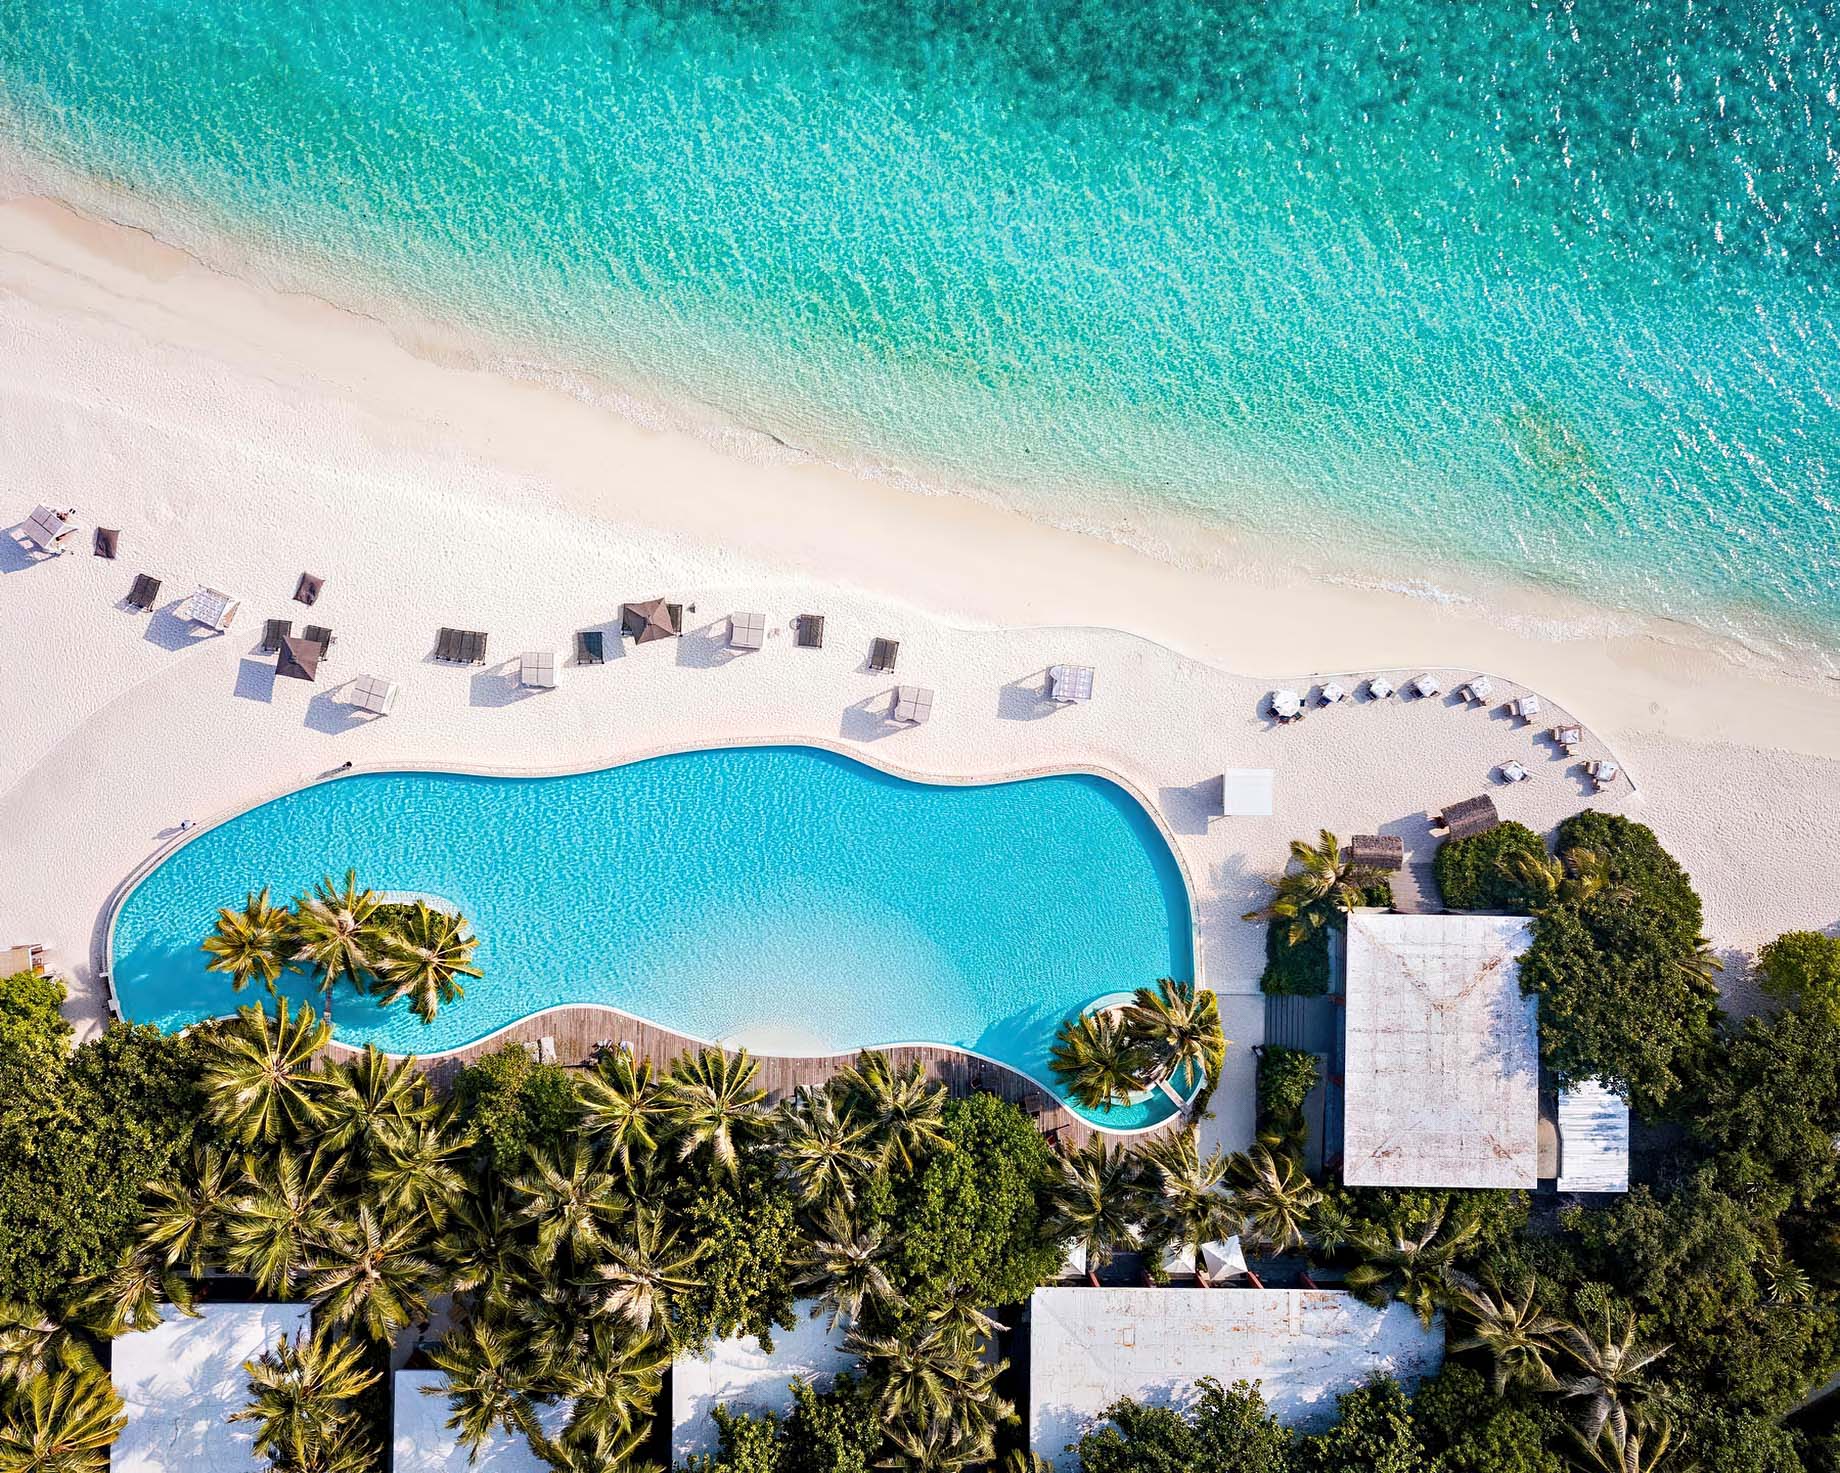 Amilla Fushi Resort and Residences - Baa Atoll, Maldives - Oceanfront Infinity Edge Pool Overhead View